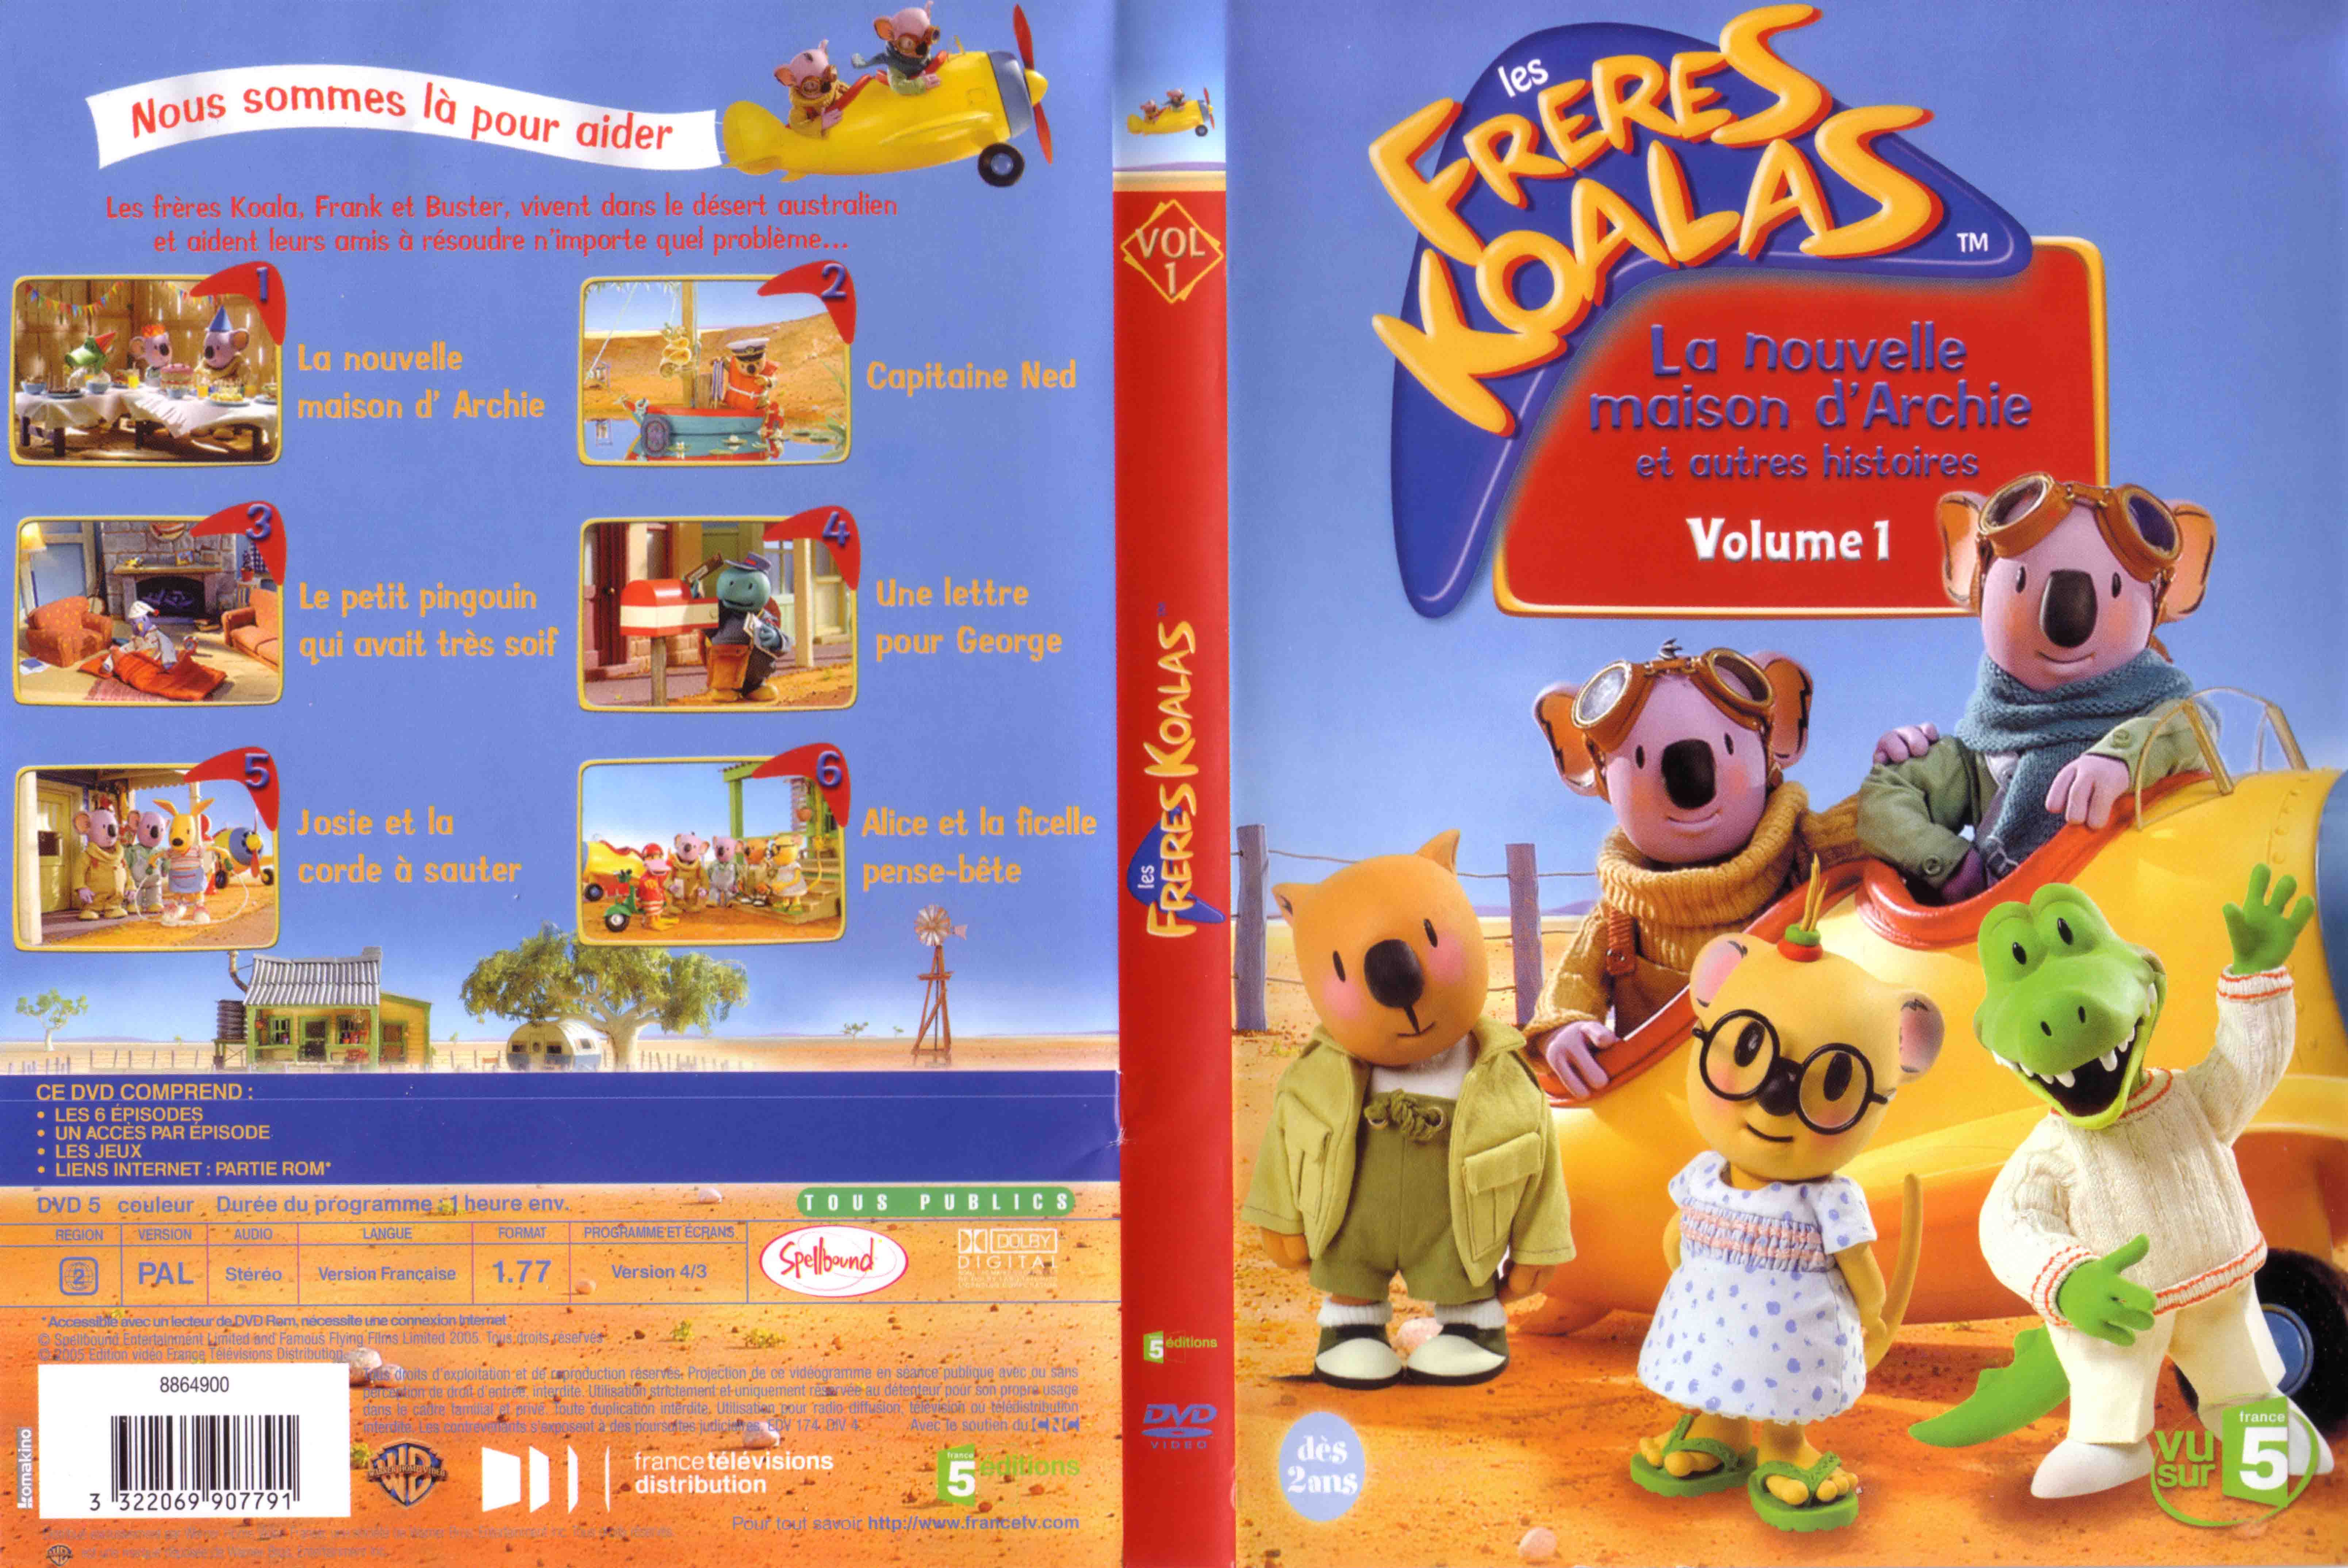 Jaquette DVD Les frres koalas vol 1